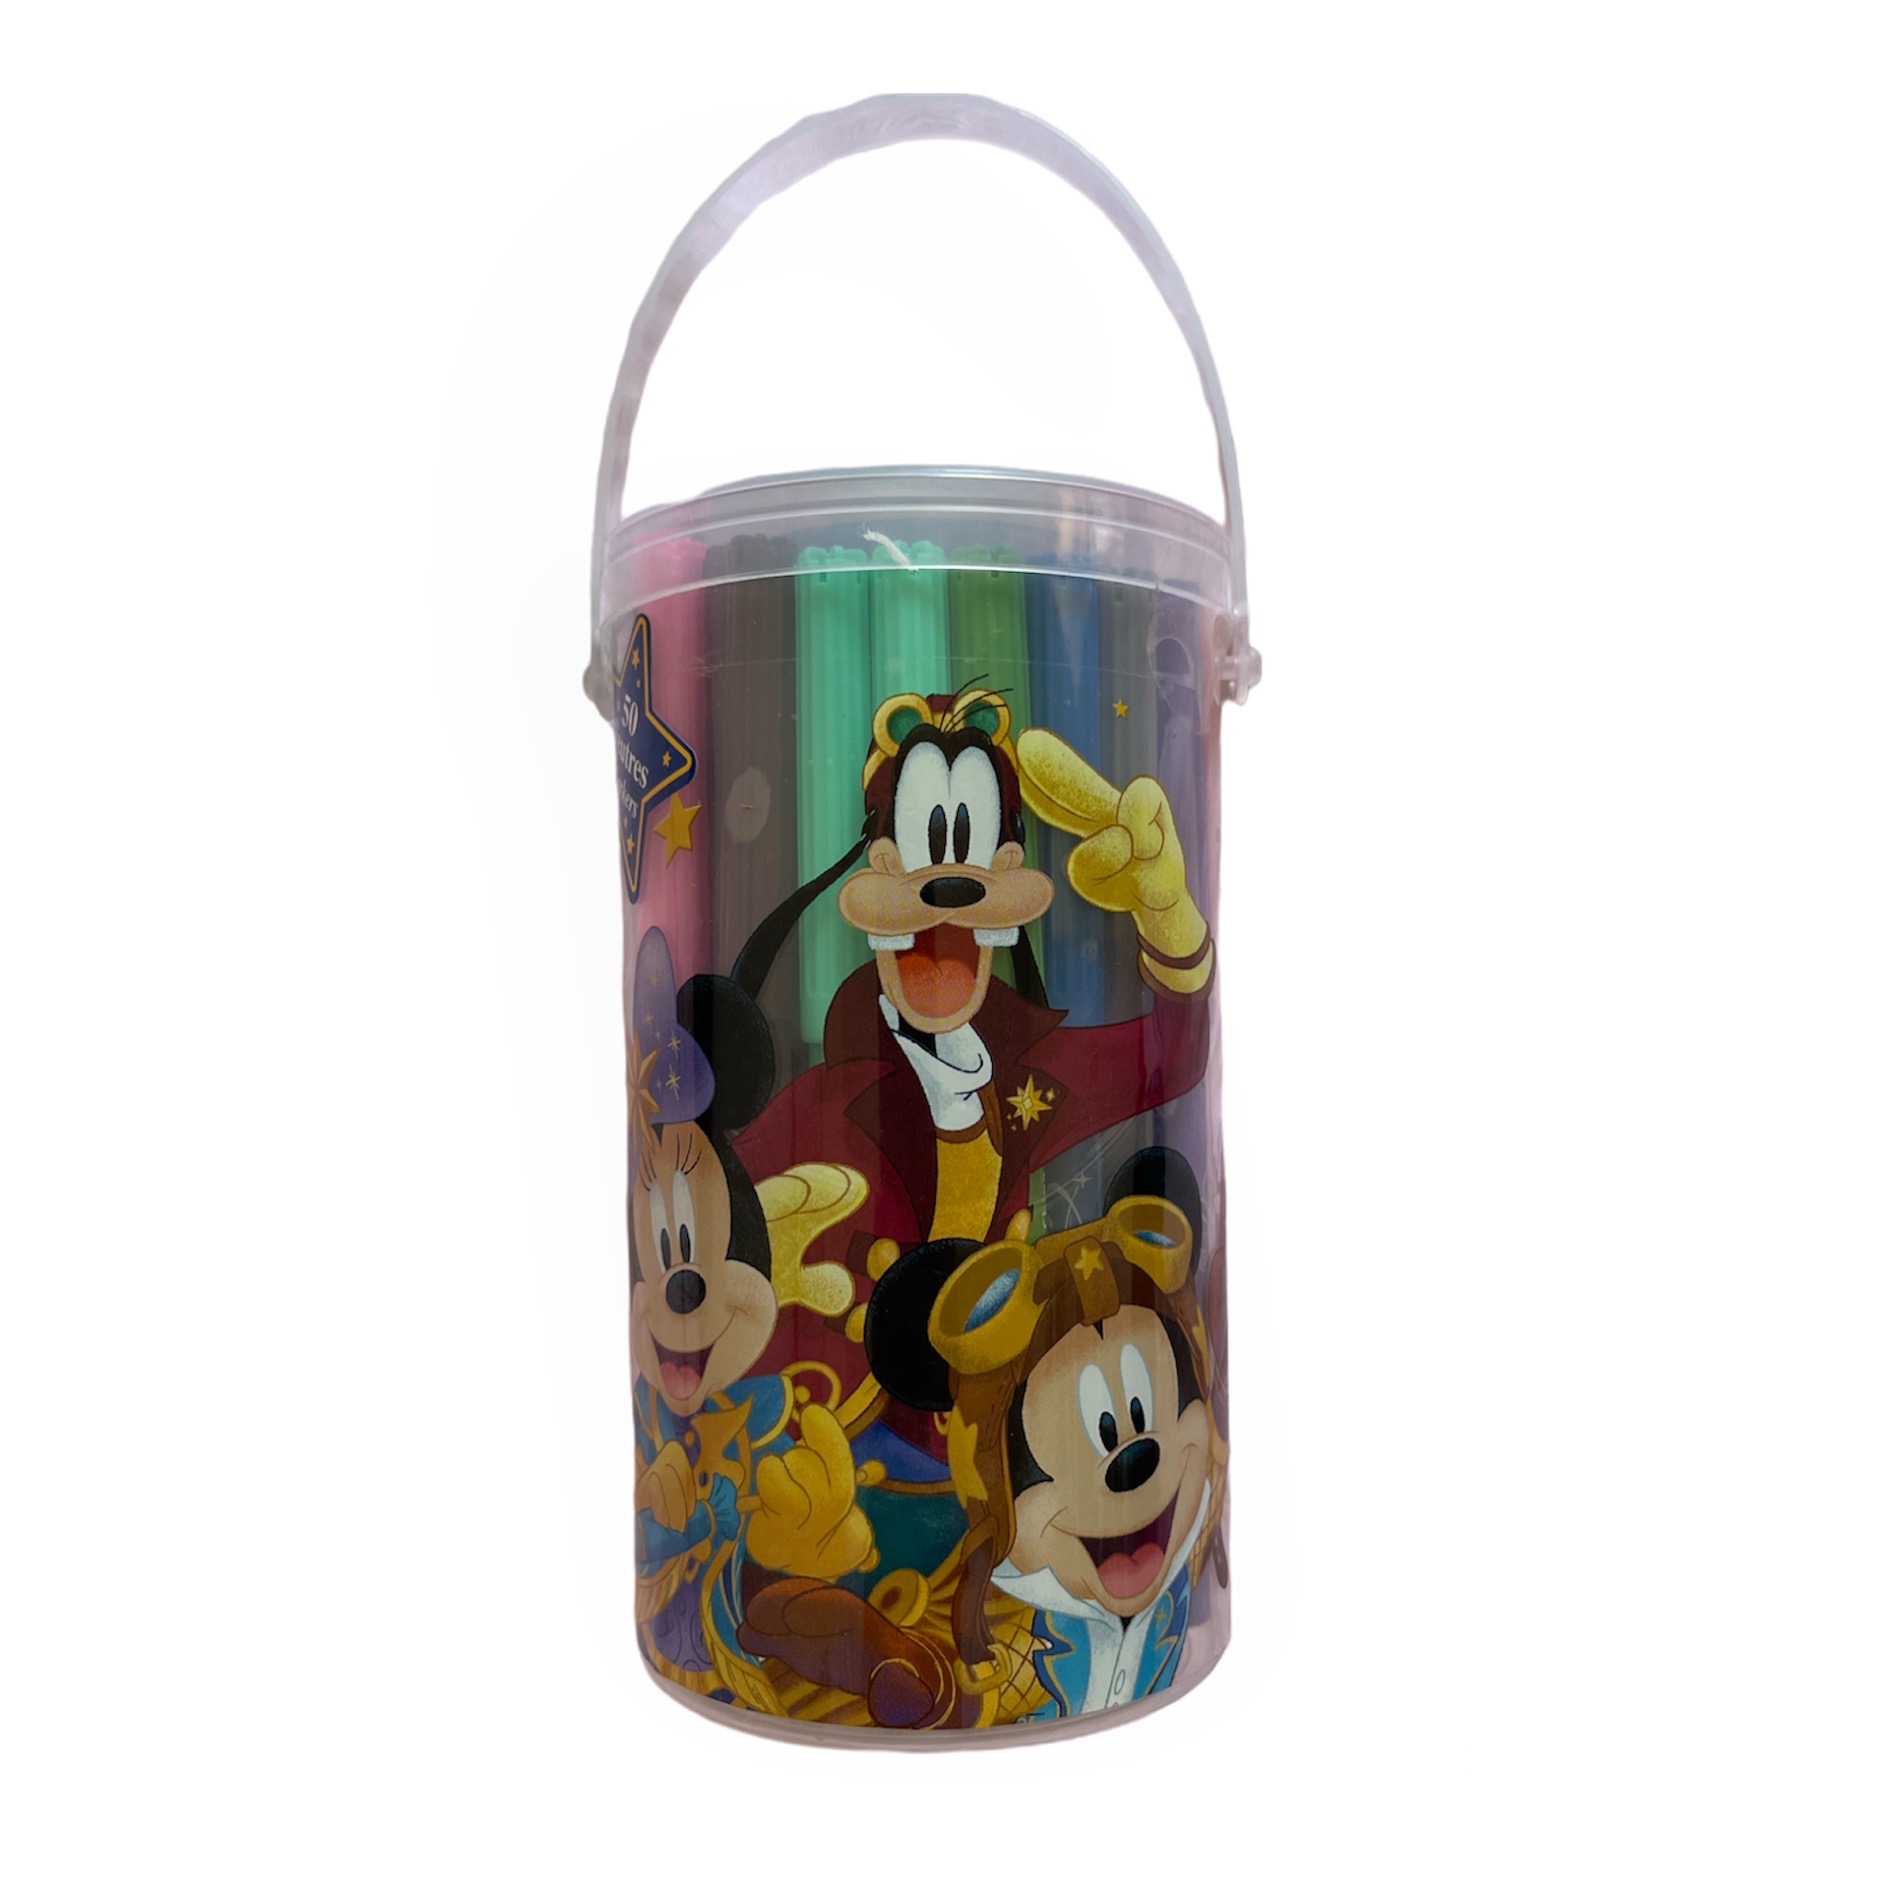 Disney - Mickey Mouse : Lot de 50 feutres